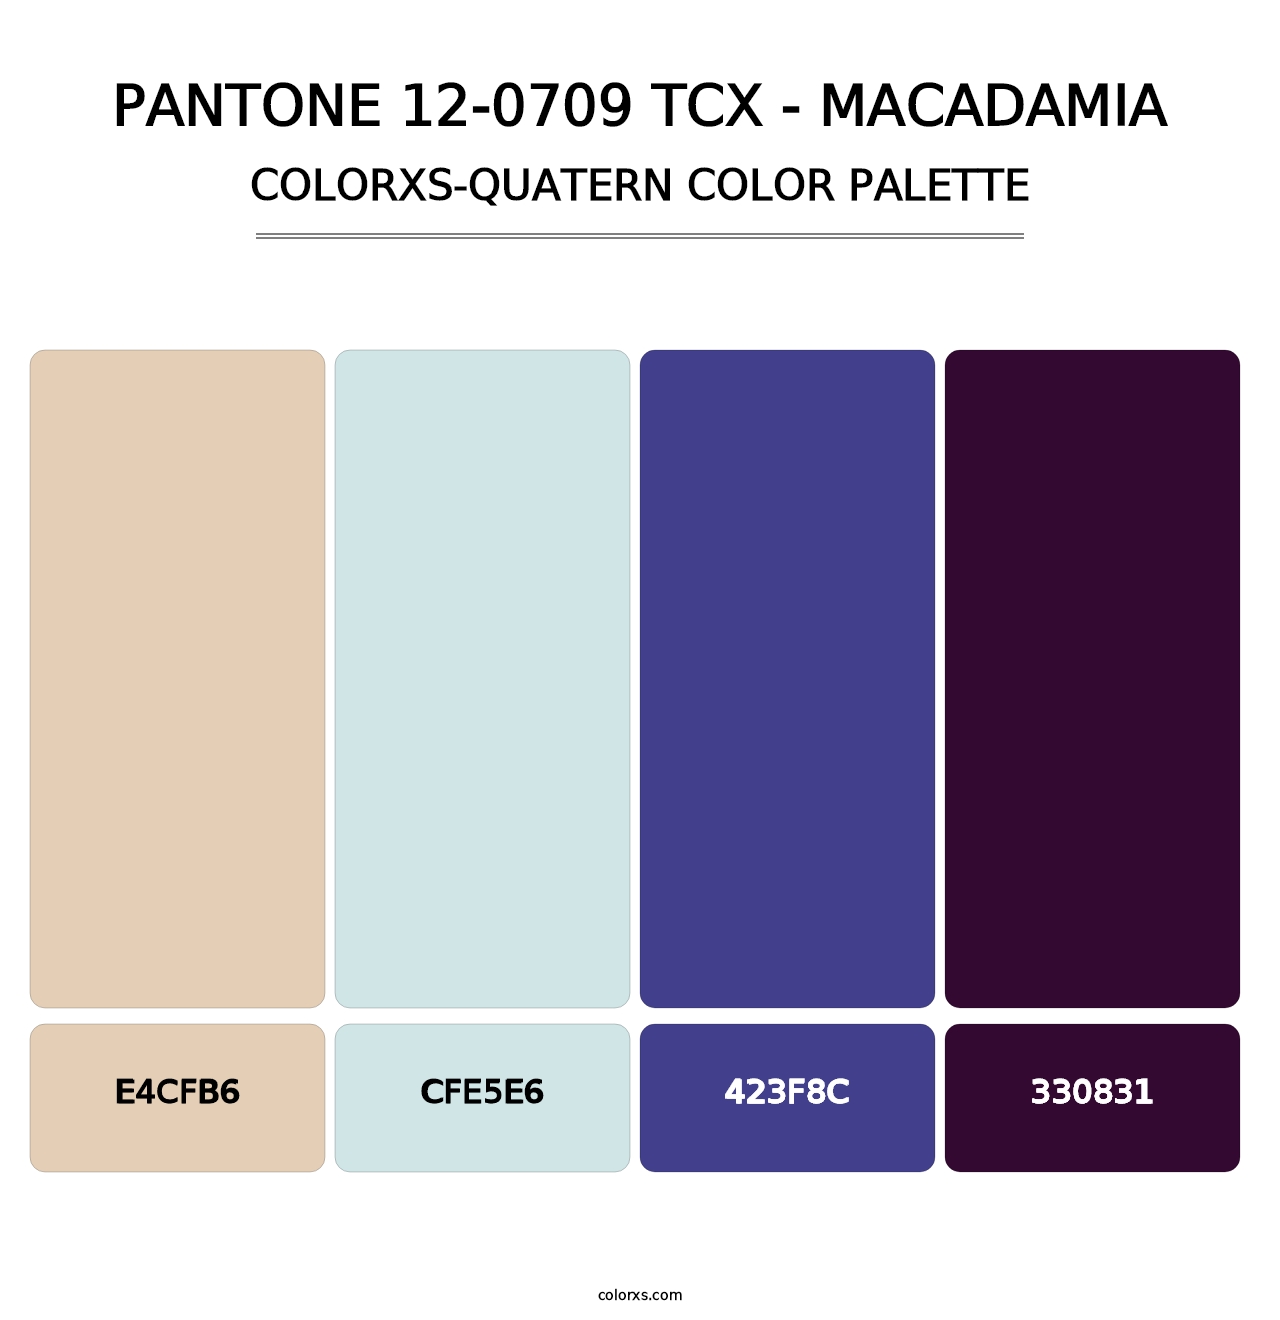 PANTONE 12-0709 TCX - Macadamia - Colorxs Quatern Palette